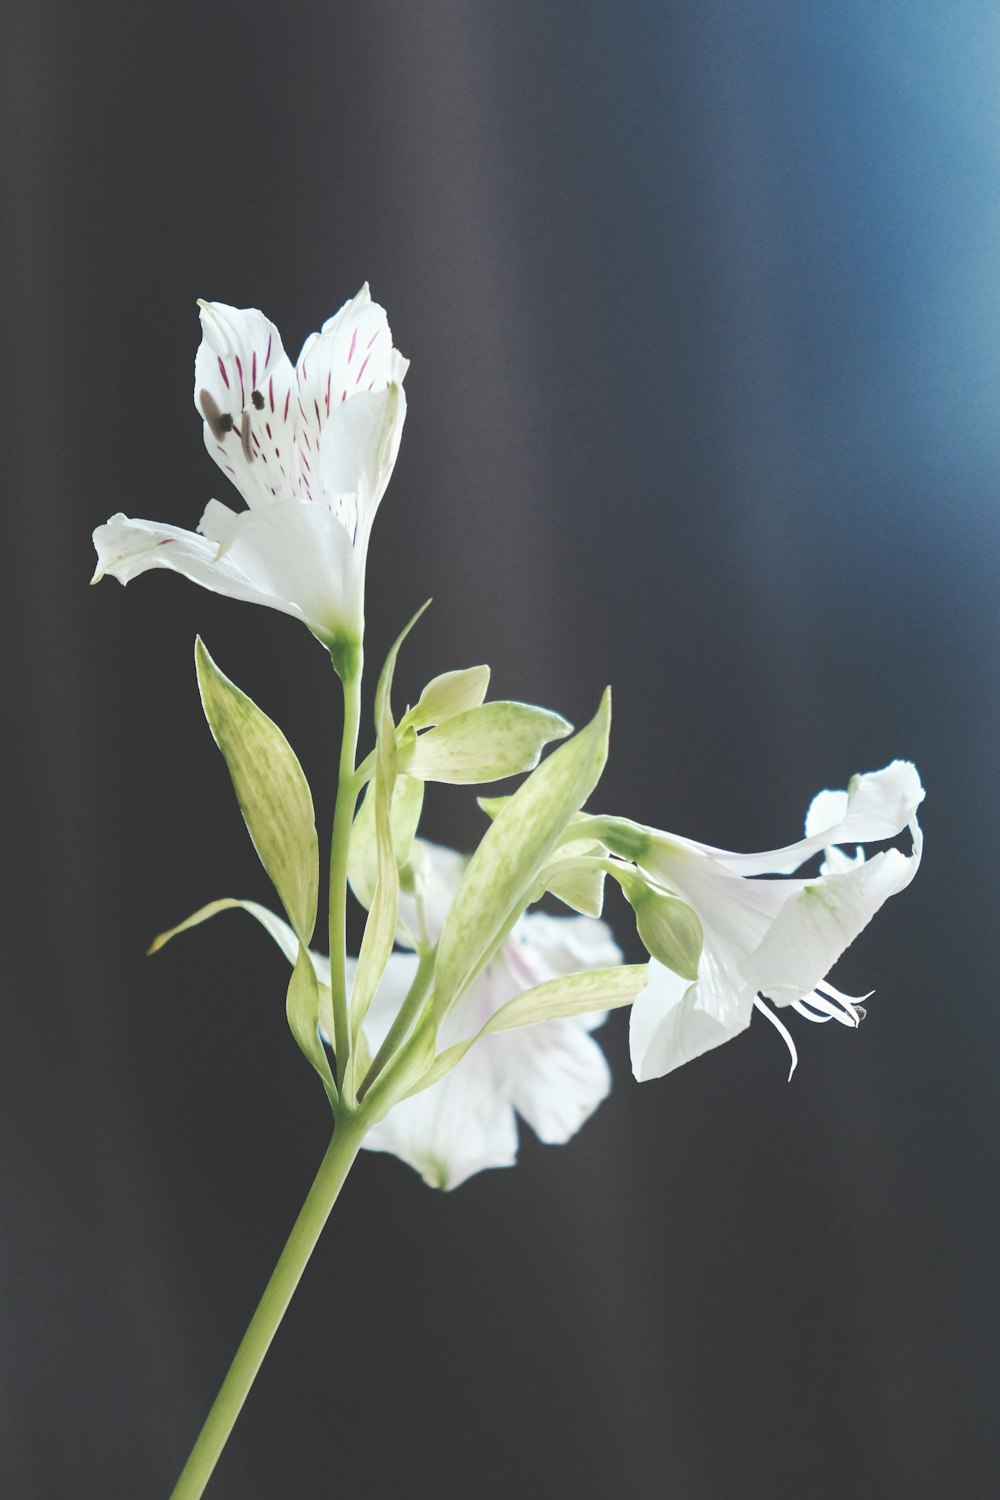 fiori bianchi in macro shot